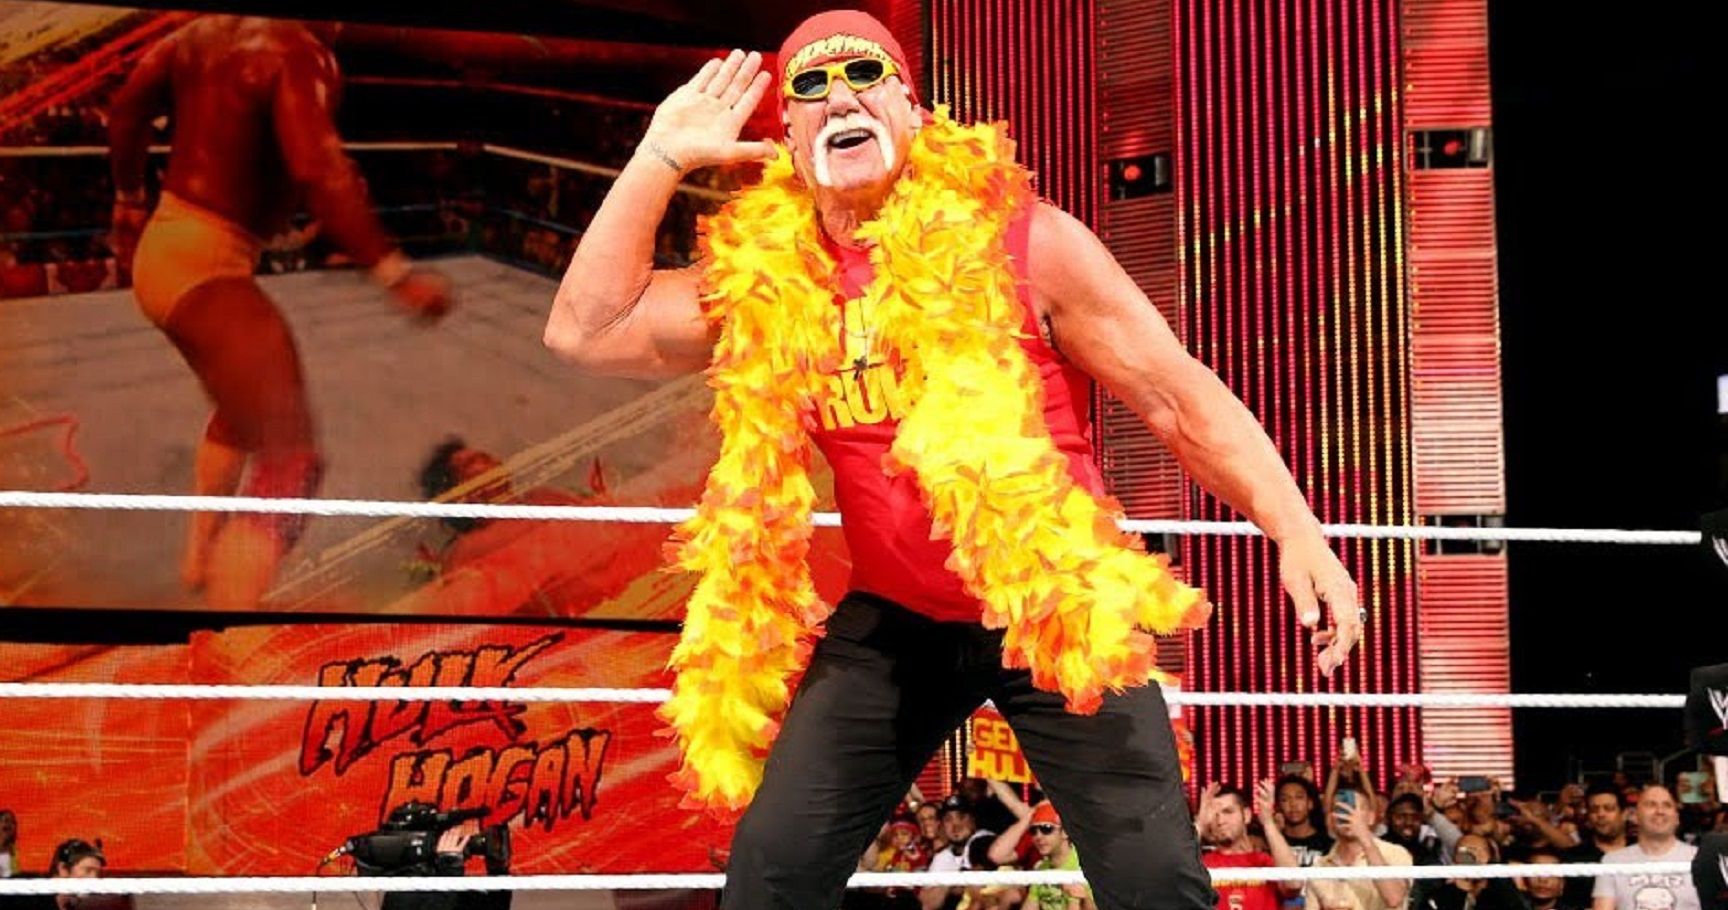 WWE® Hulk Hogan™ Ultimate Edition Action Figure – Mattel Creations